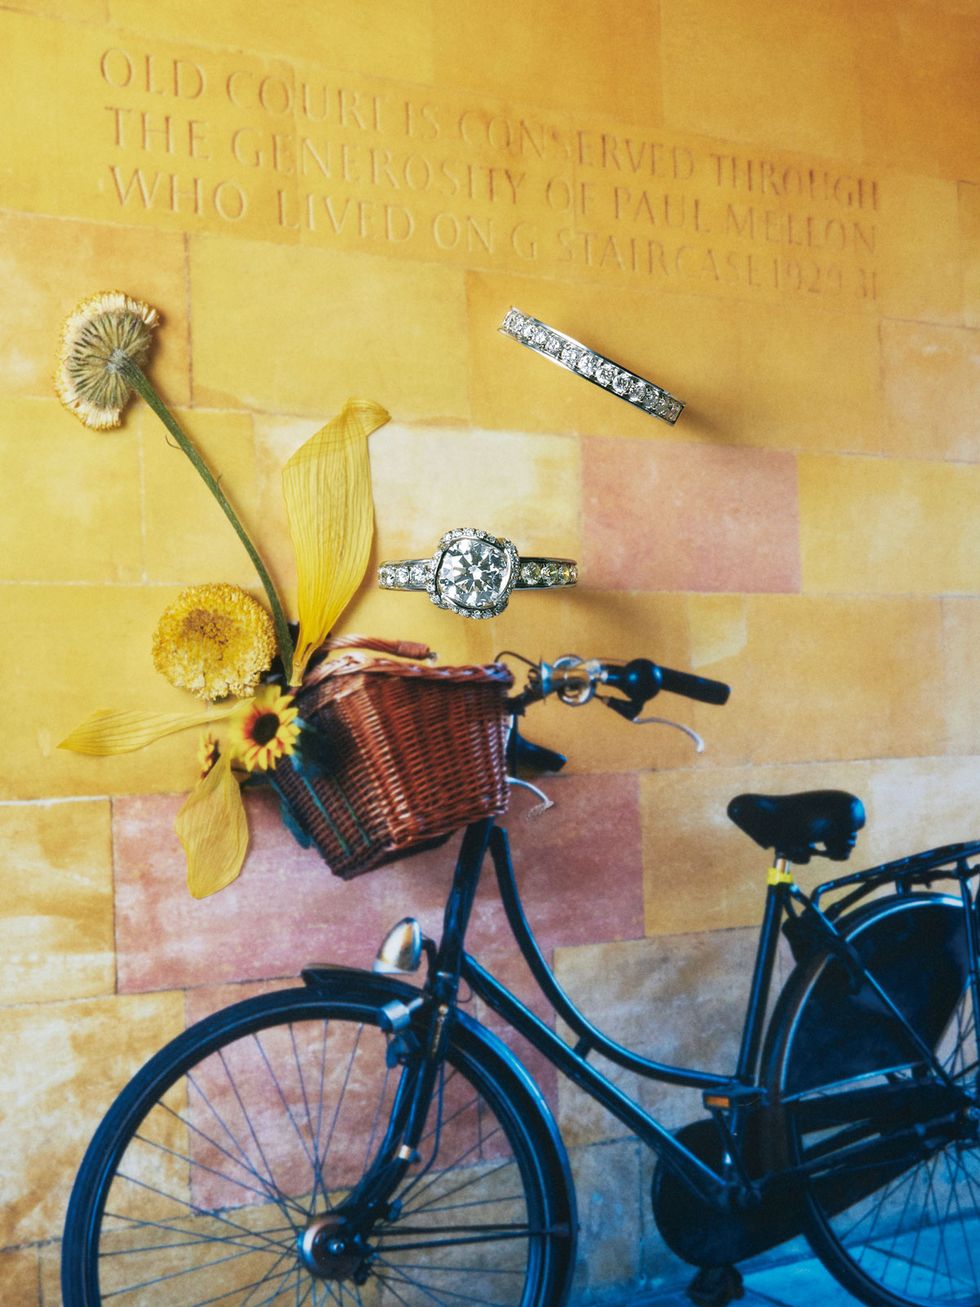 Bicycle, Yellow, Bicycle part, Bicycle wheel, Bicycle accessory, Vehicle, Wall, Bicycle handlebar, Bicycle saddle, Bicycle fork, 